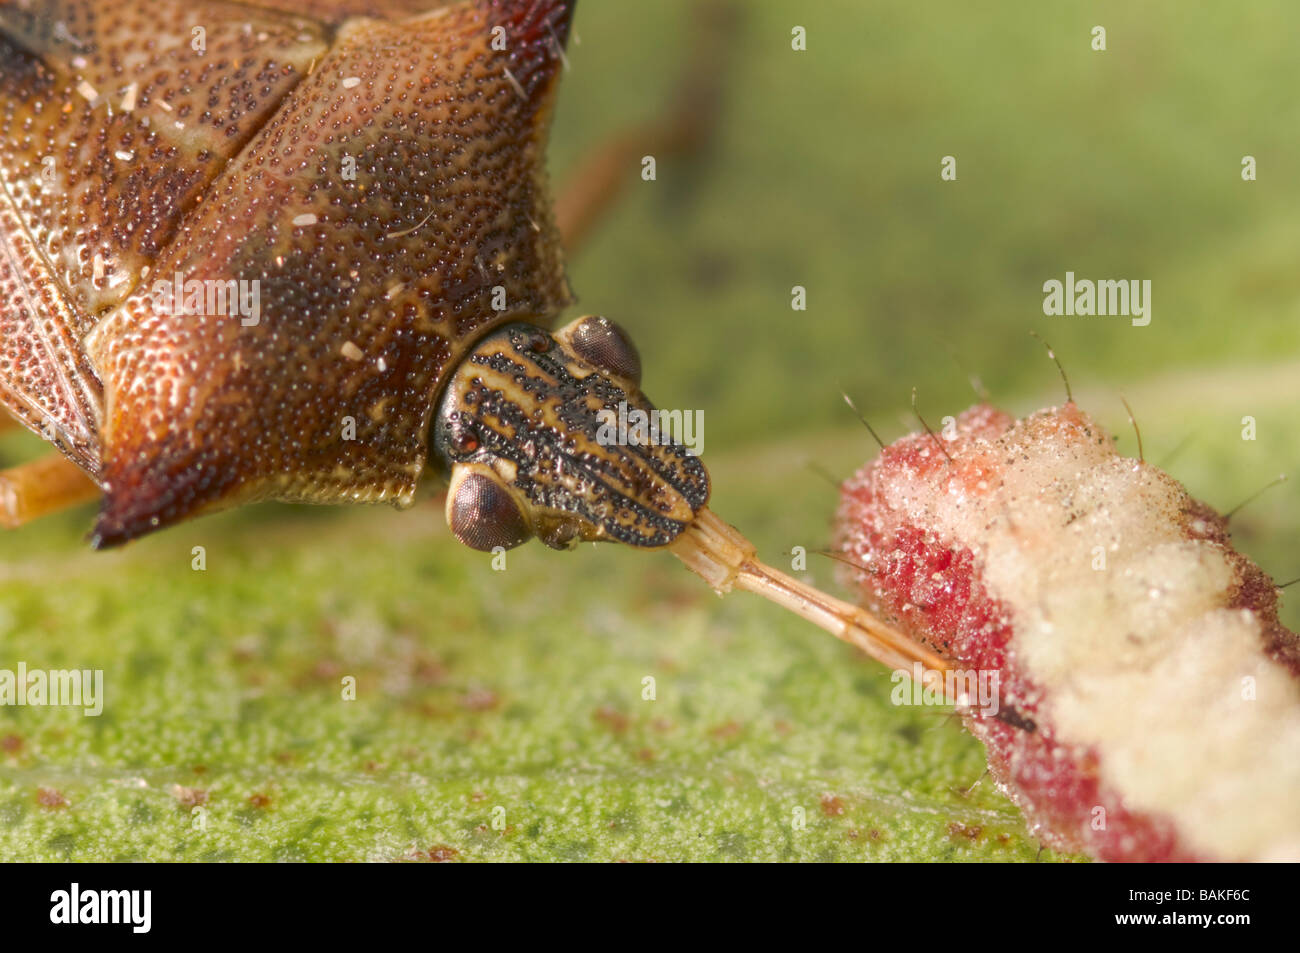 Predatory shield bug feeding on beetle grub Stock Photo